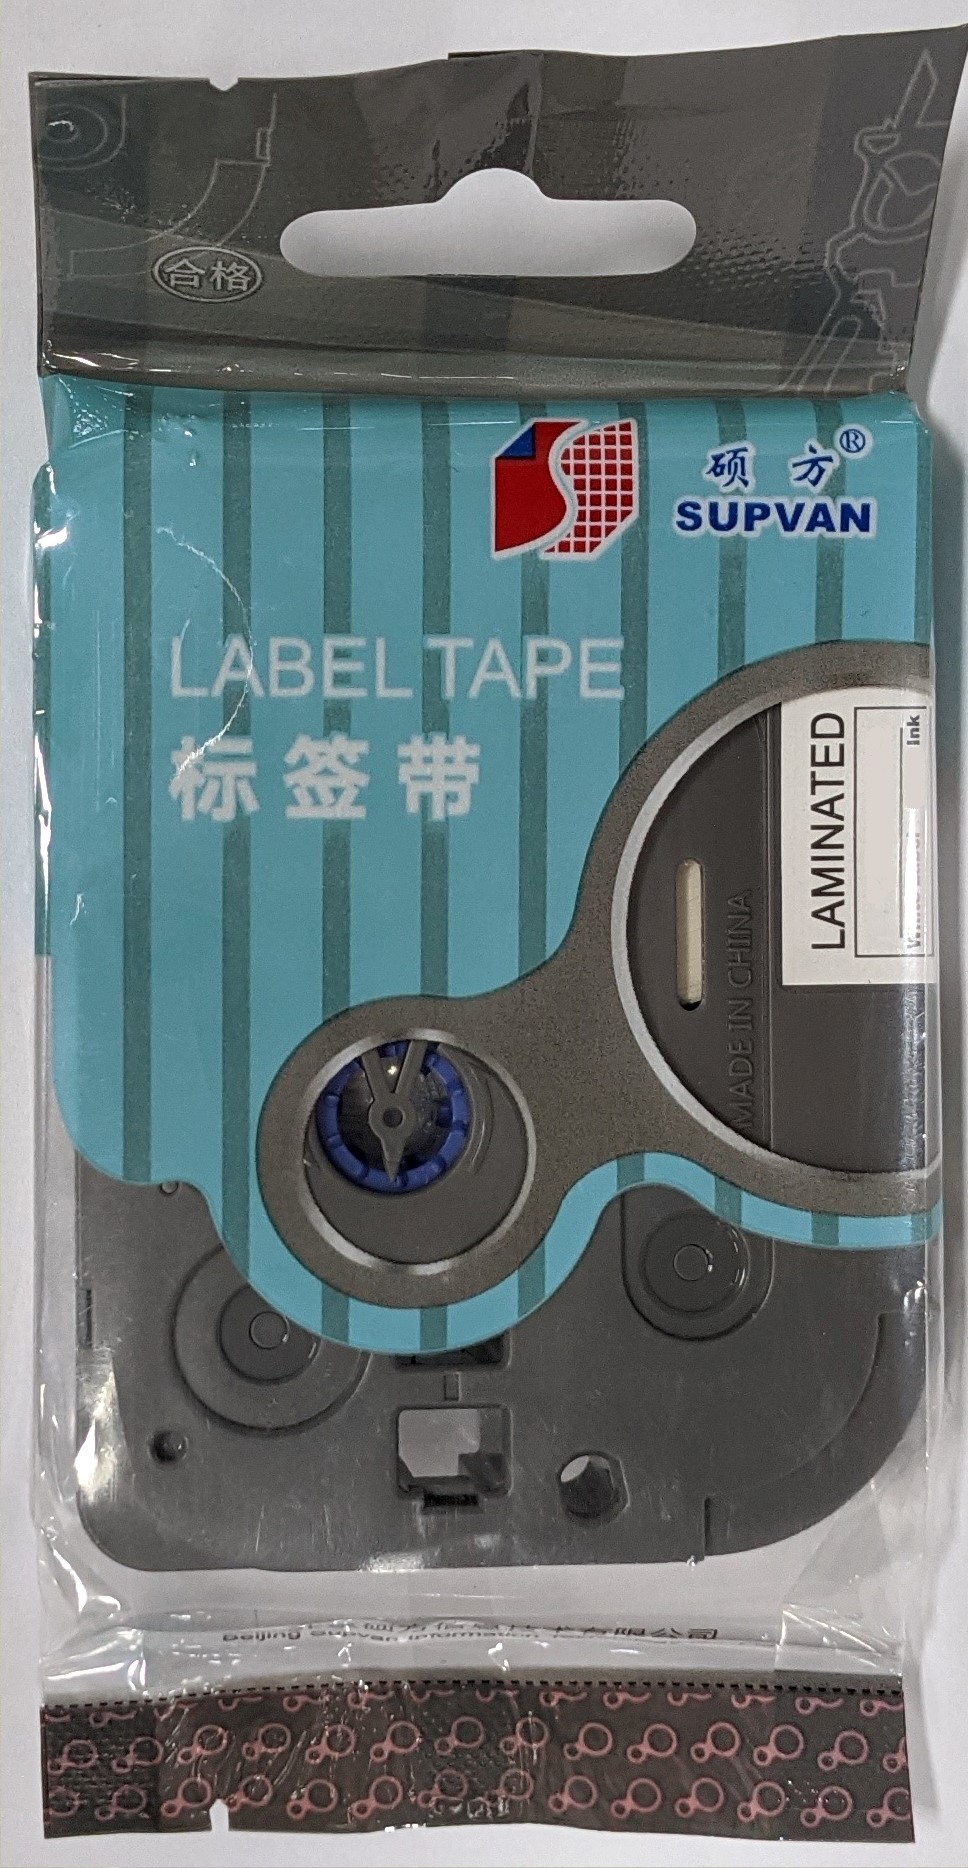 Samolepicí páska Supvan L-231E, 12mm x 8m, černý tisk / bílý podklad, laminovaná